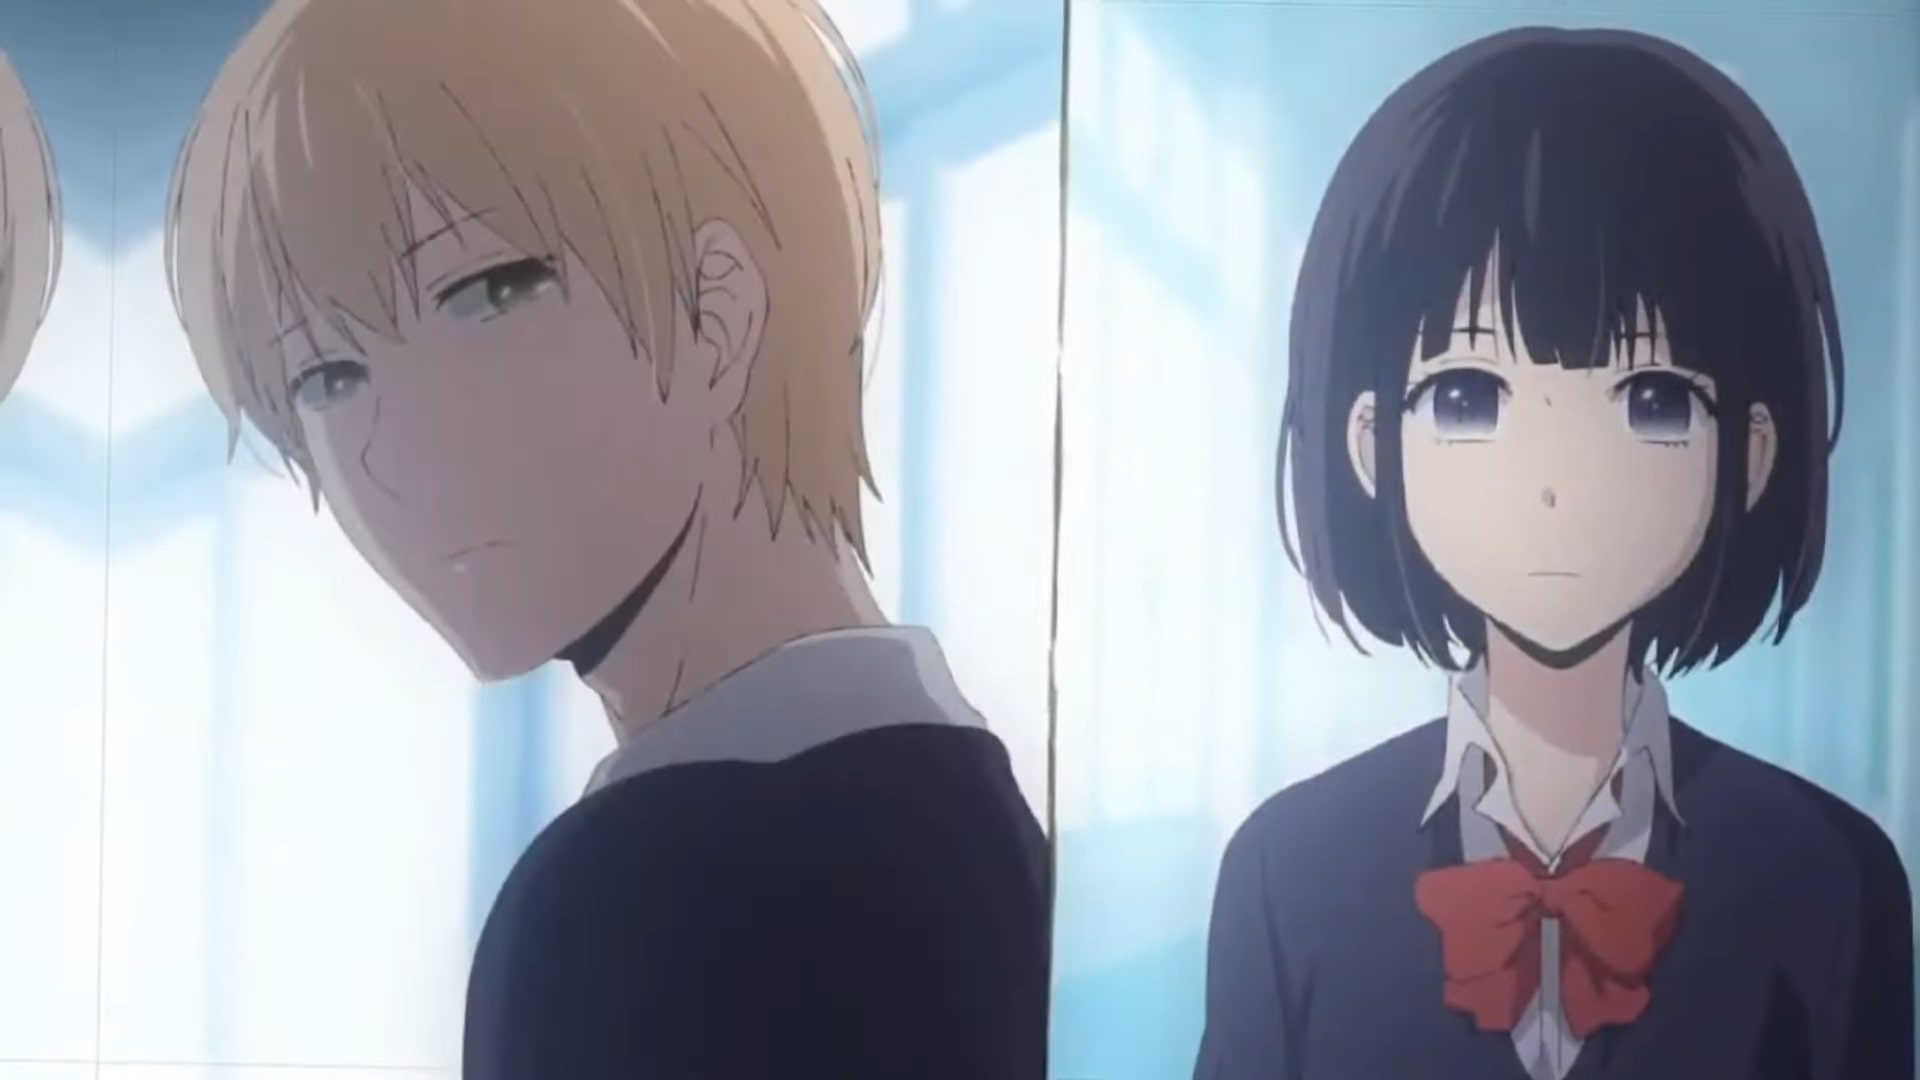 Domestic Girlfriend Romance Manga Gets TV Anime  News  Anime News Network